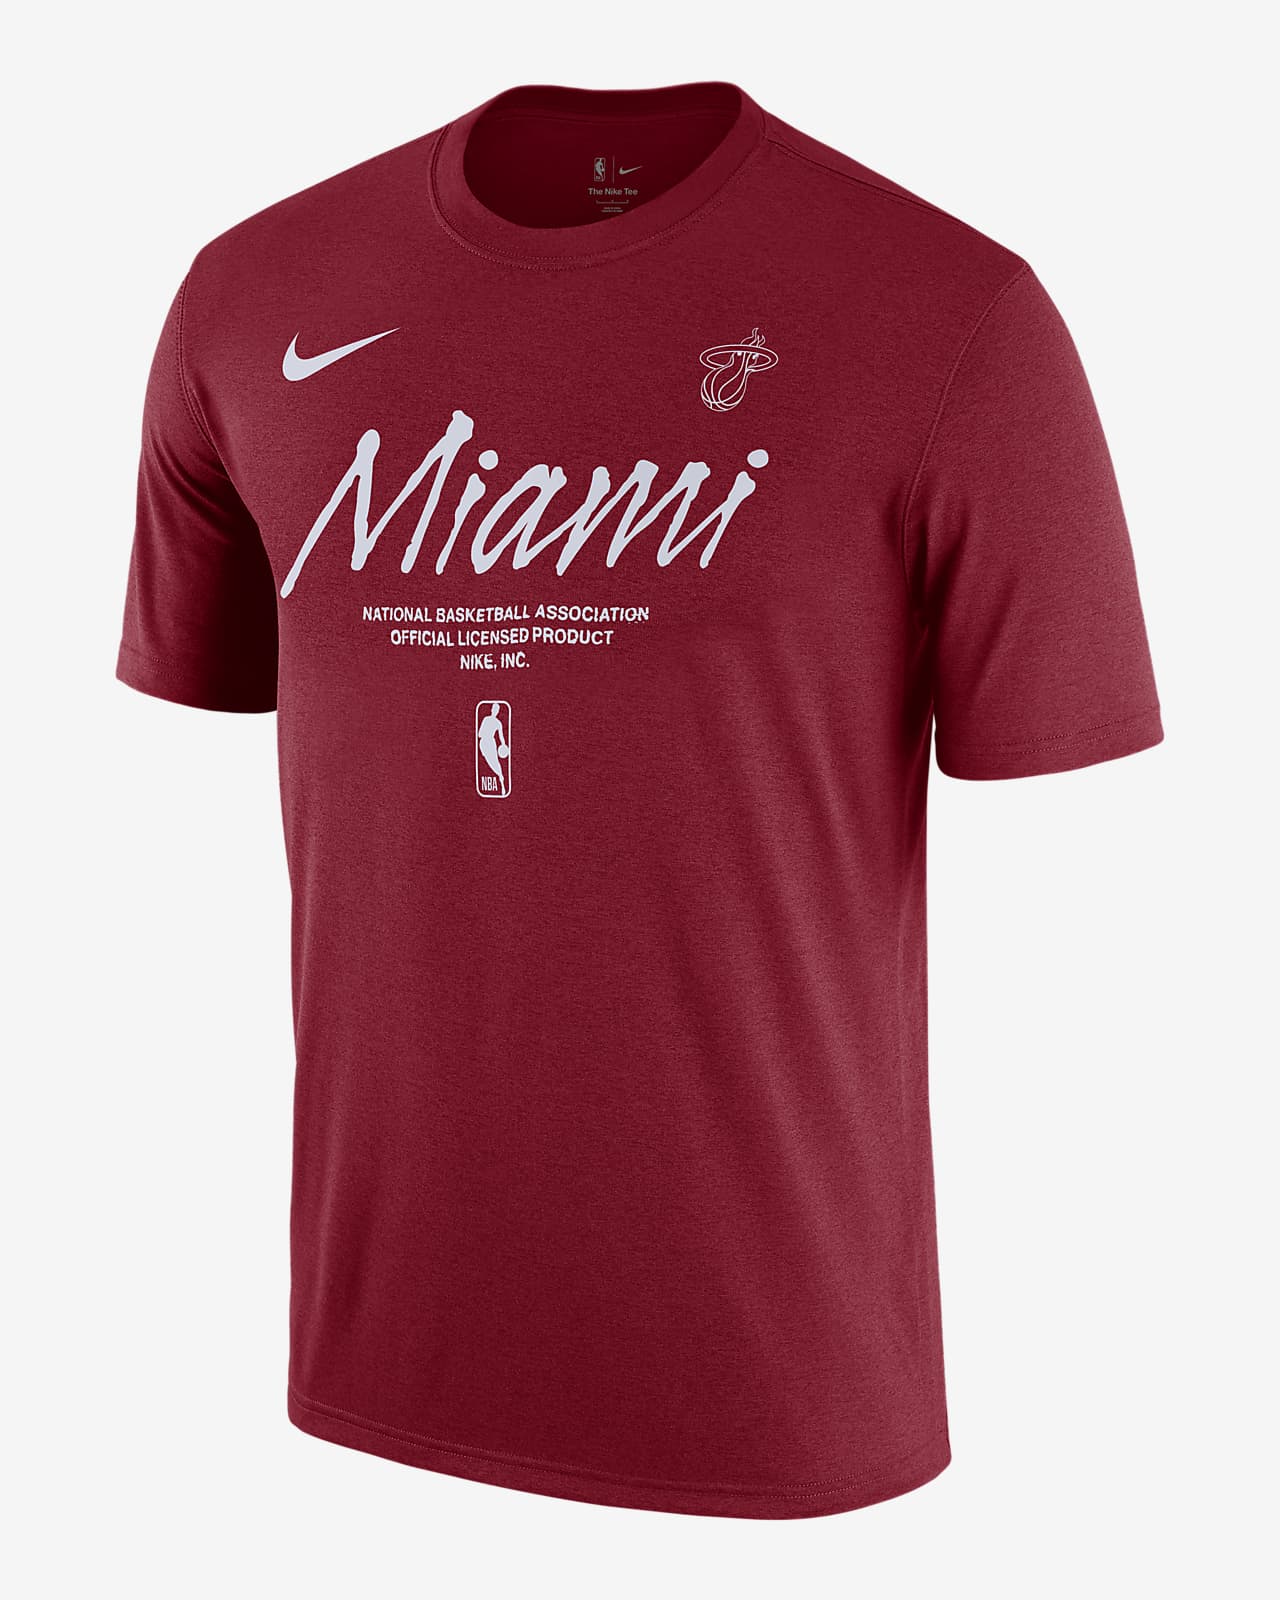 Miami Heat NBA T-shirt - 